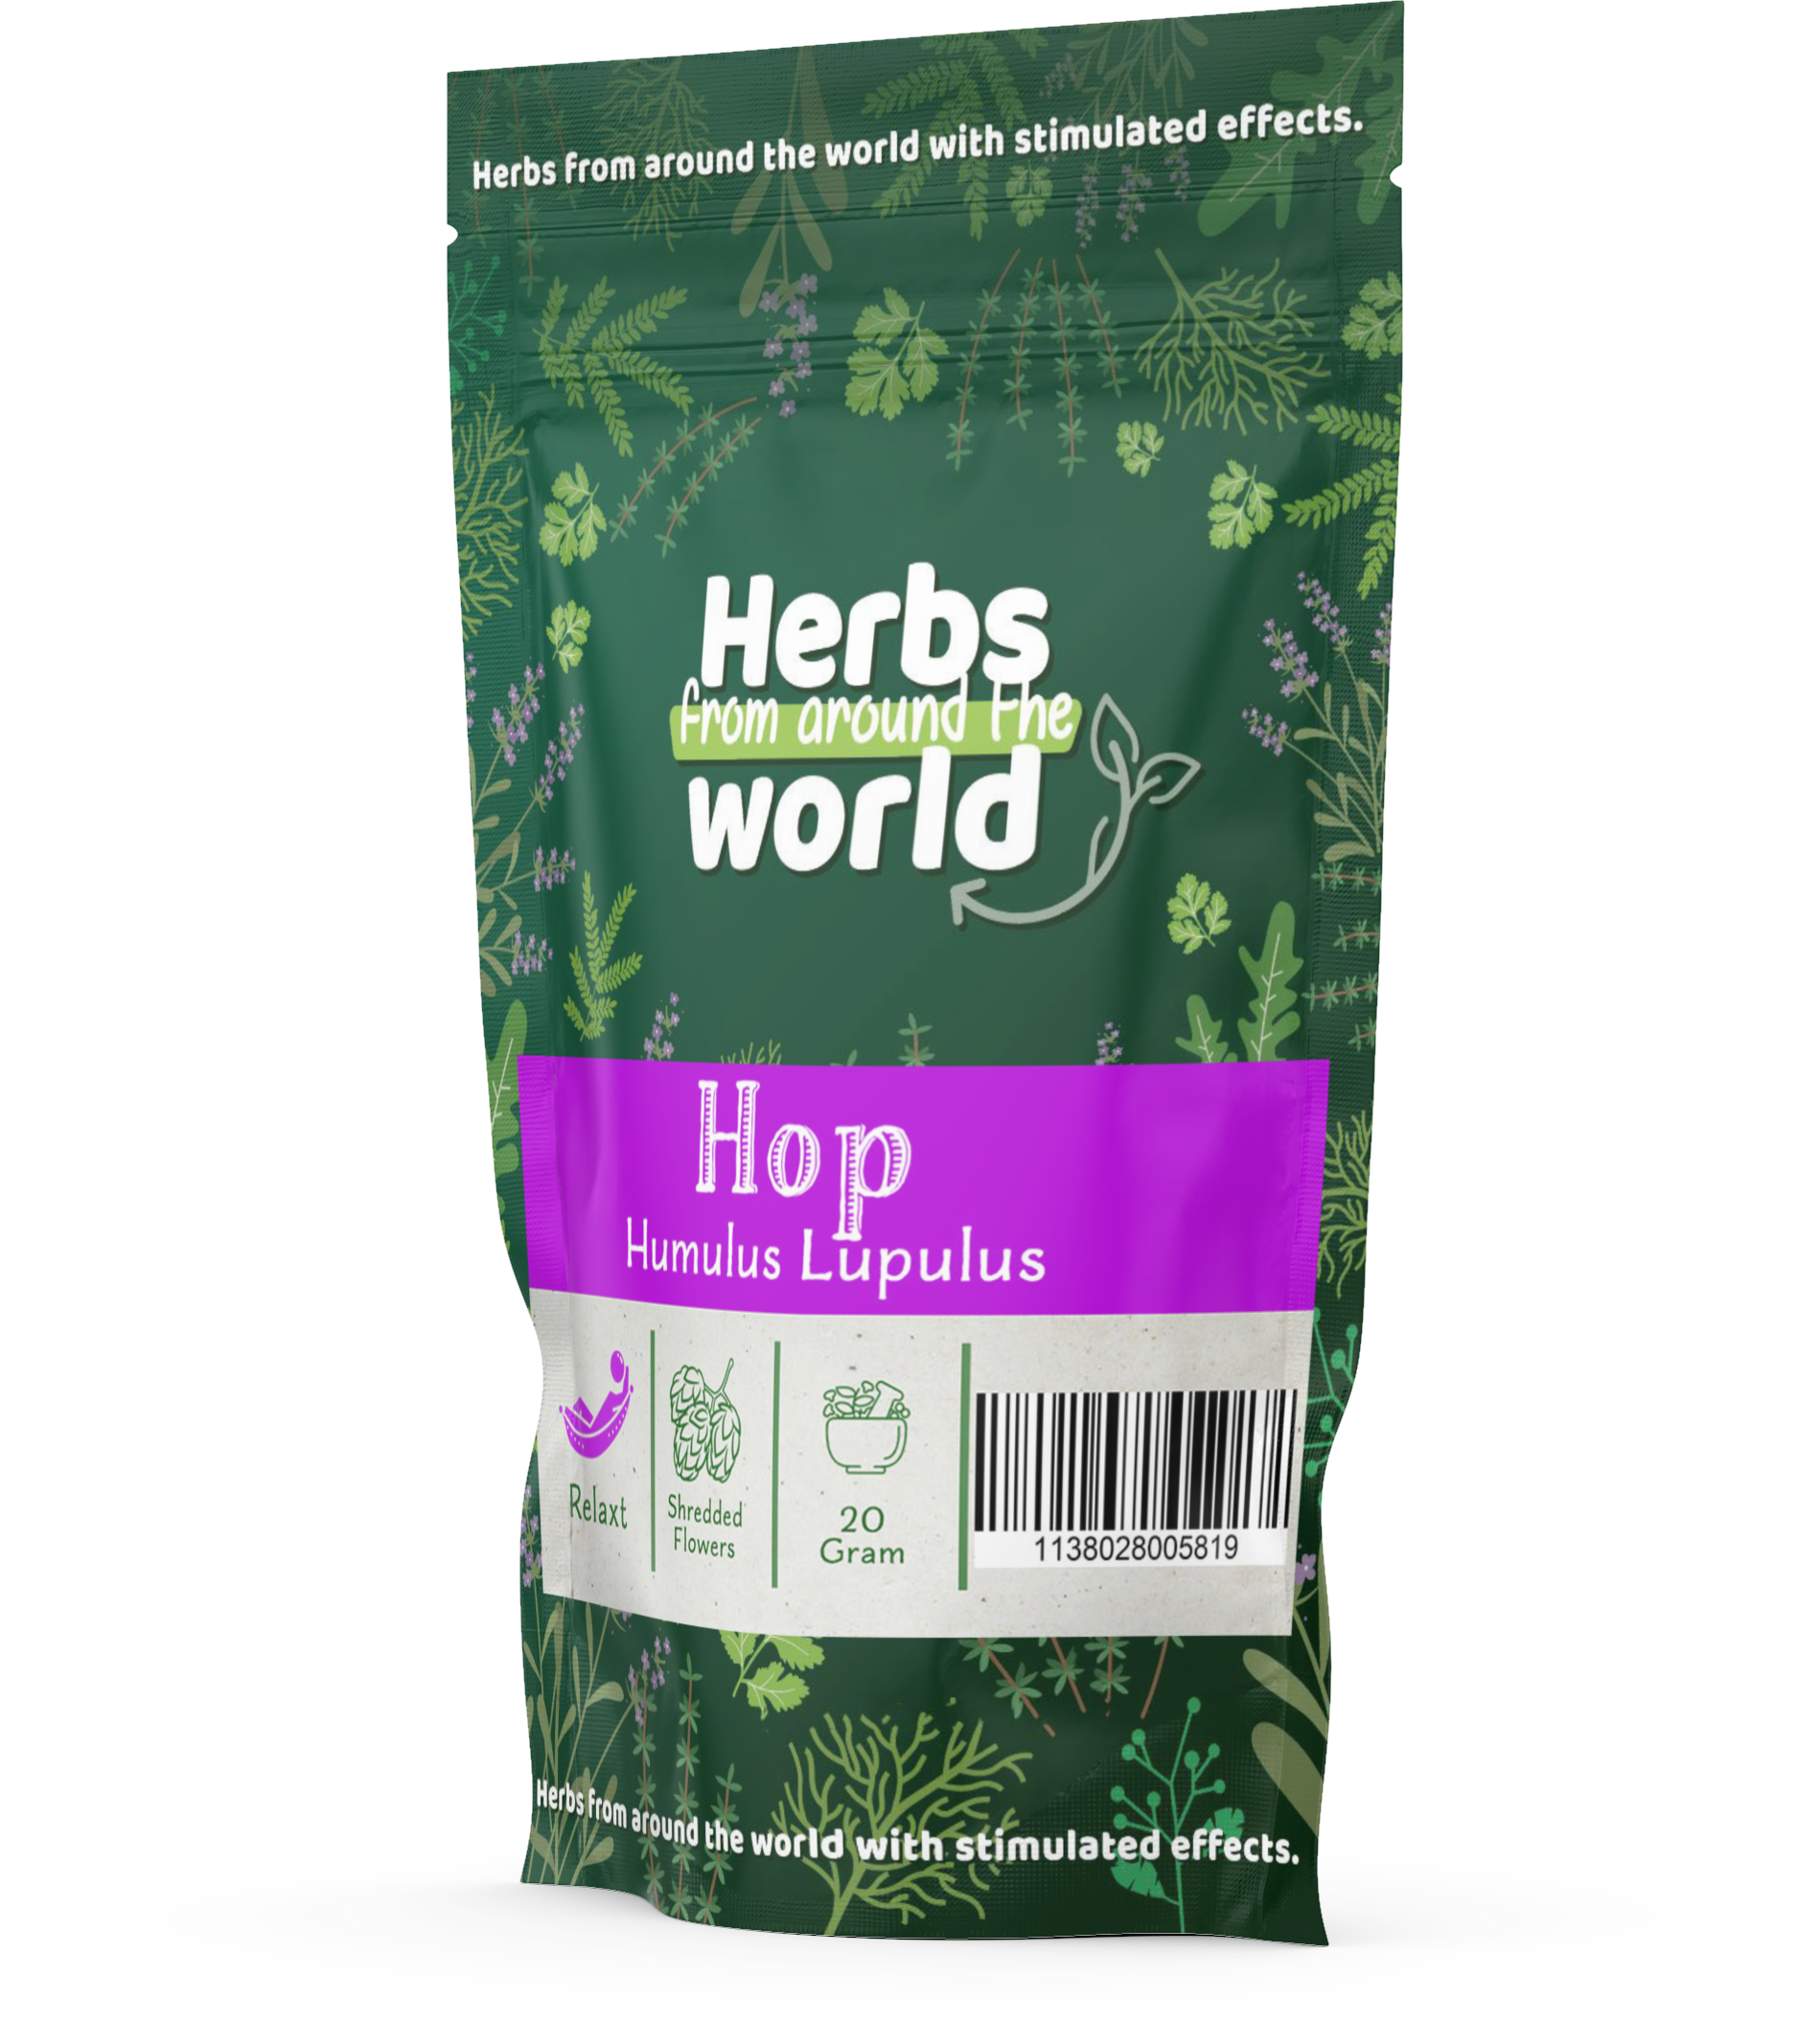 Humulus Lupulus – Hop, hops